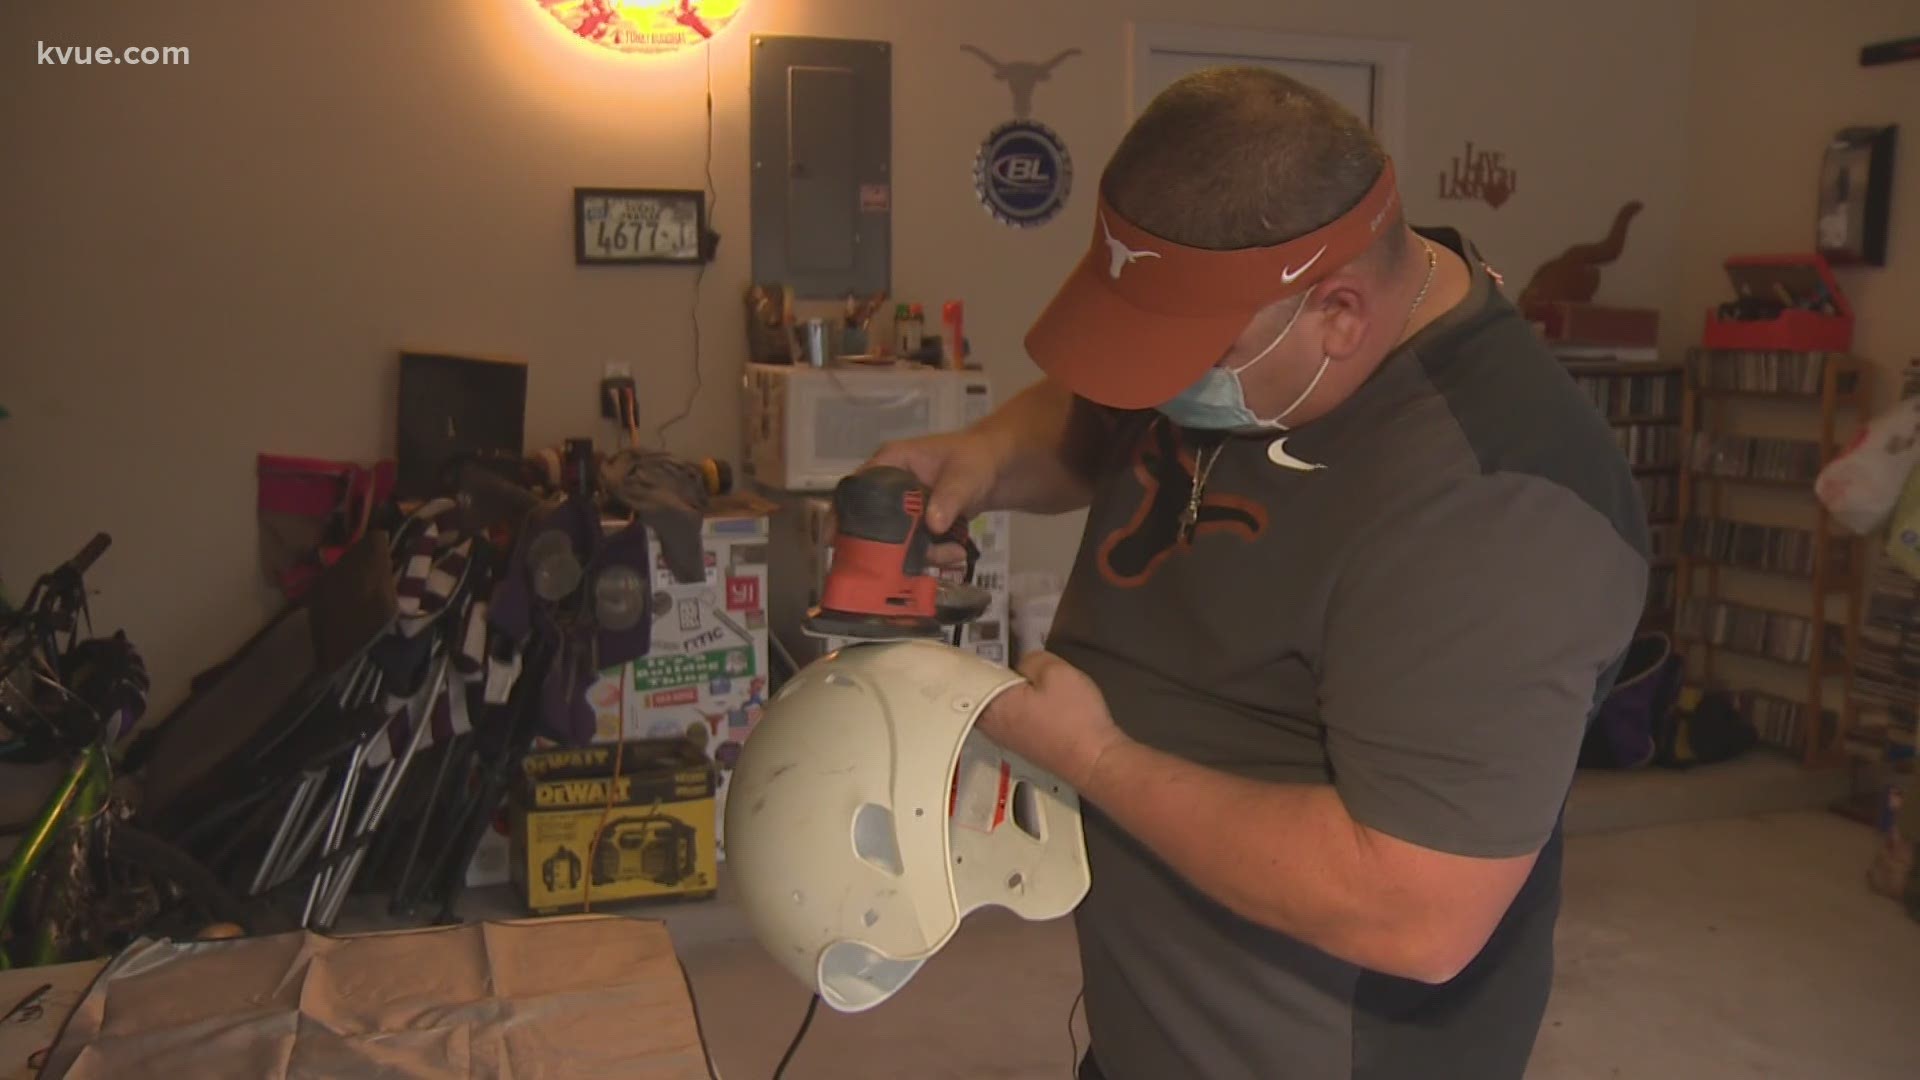 Longhorns fan Nate Gunderson is gifting a custom helmet to Wes Laurel. It's his way of paying it forward.